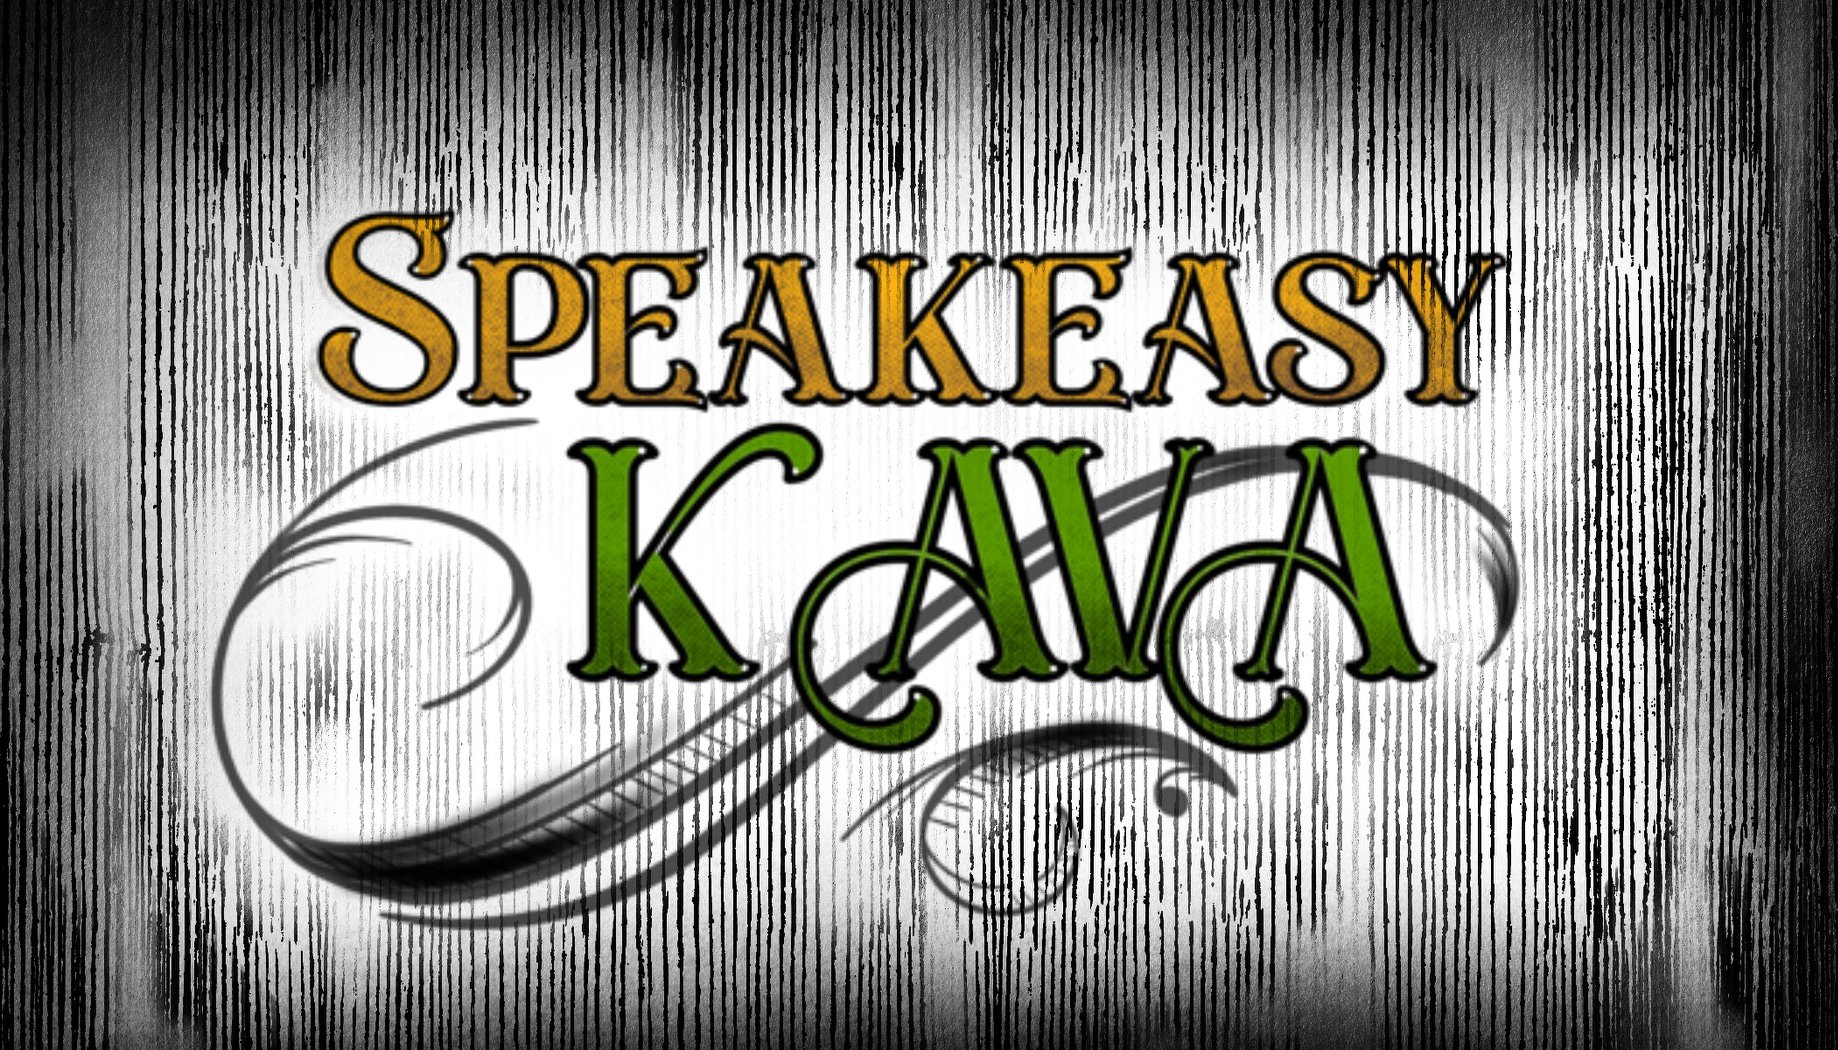 Speakeasy Kava bar opens in downtown Morganton - Kava Bar Info